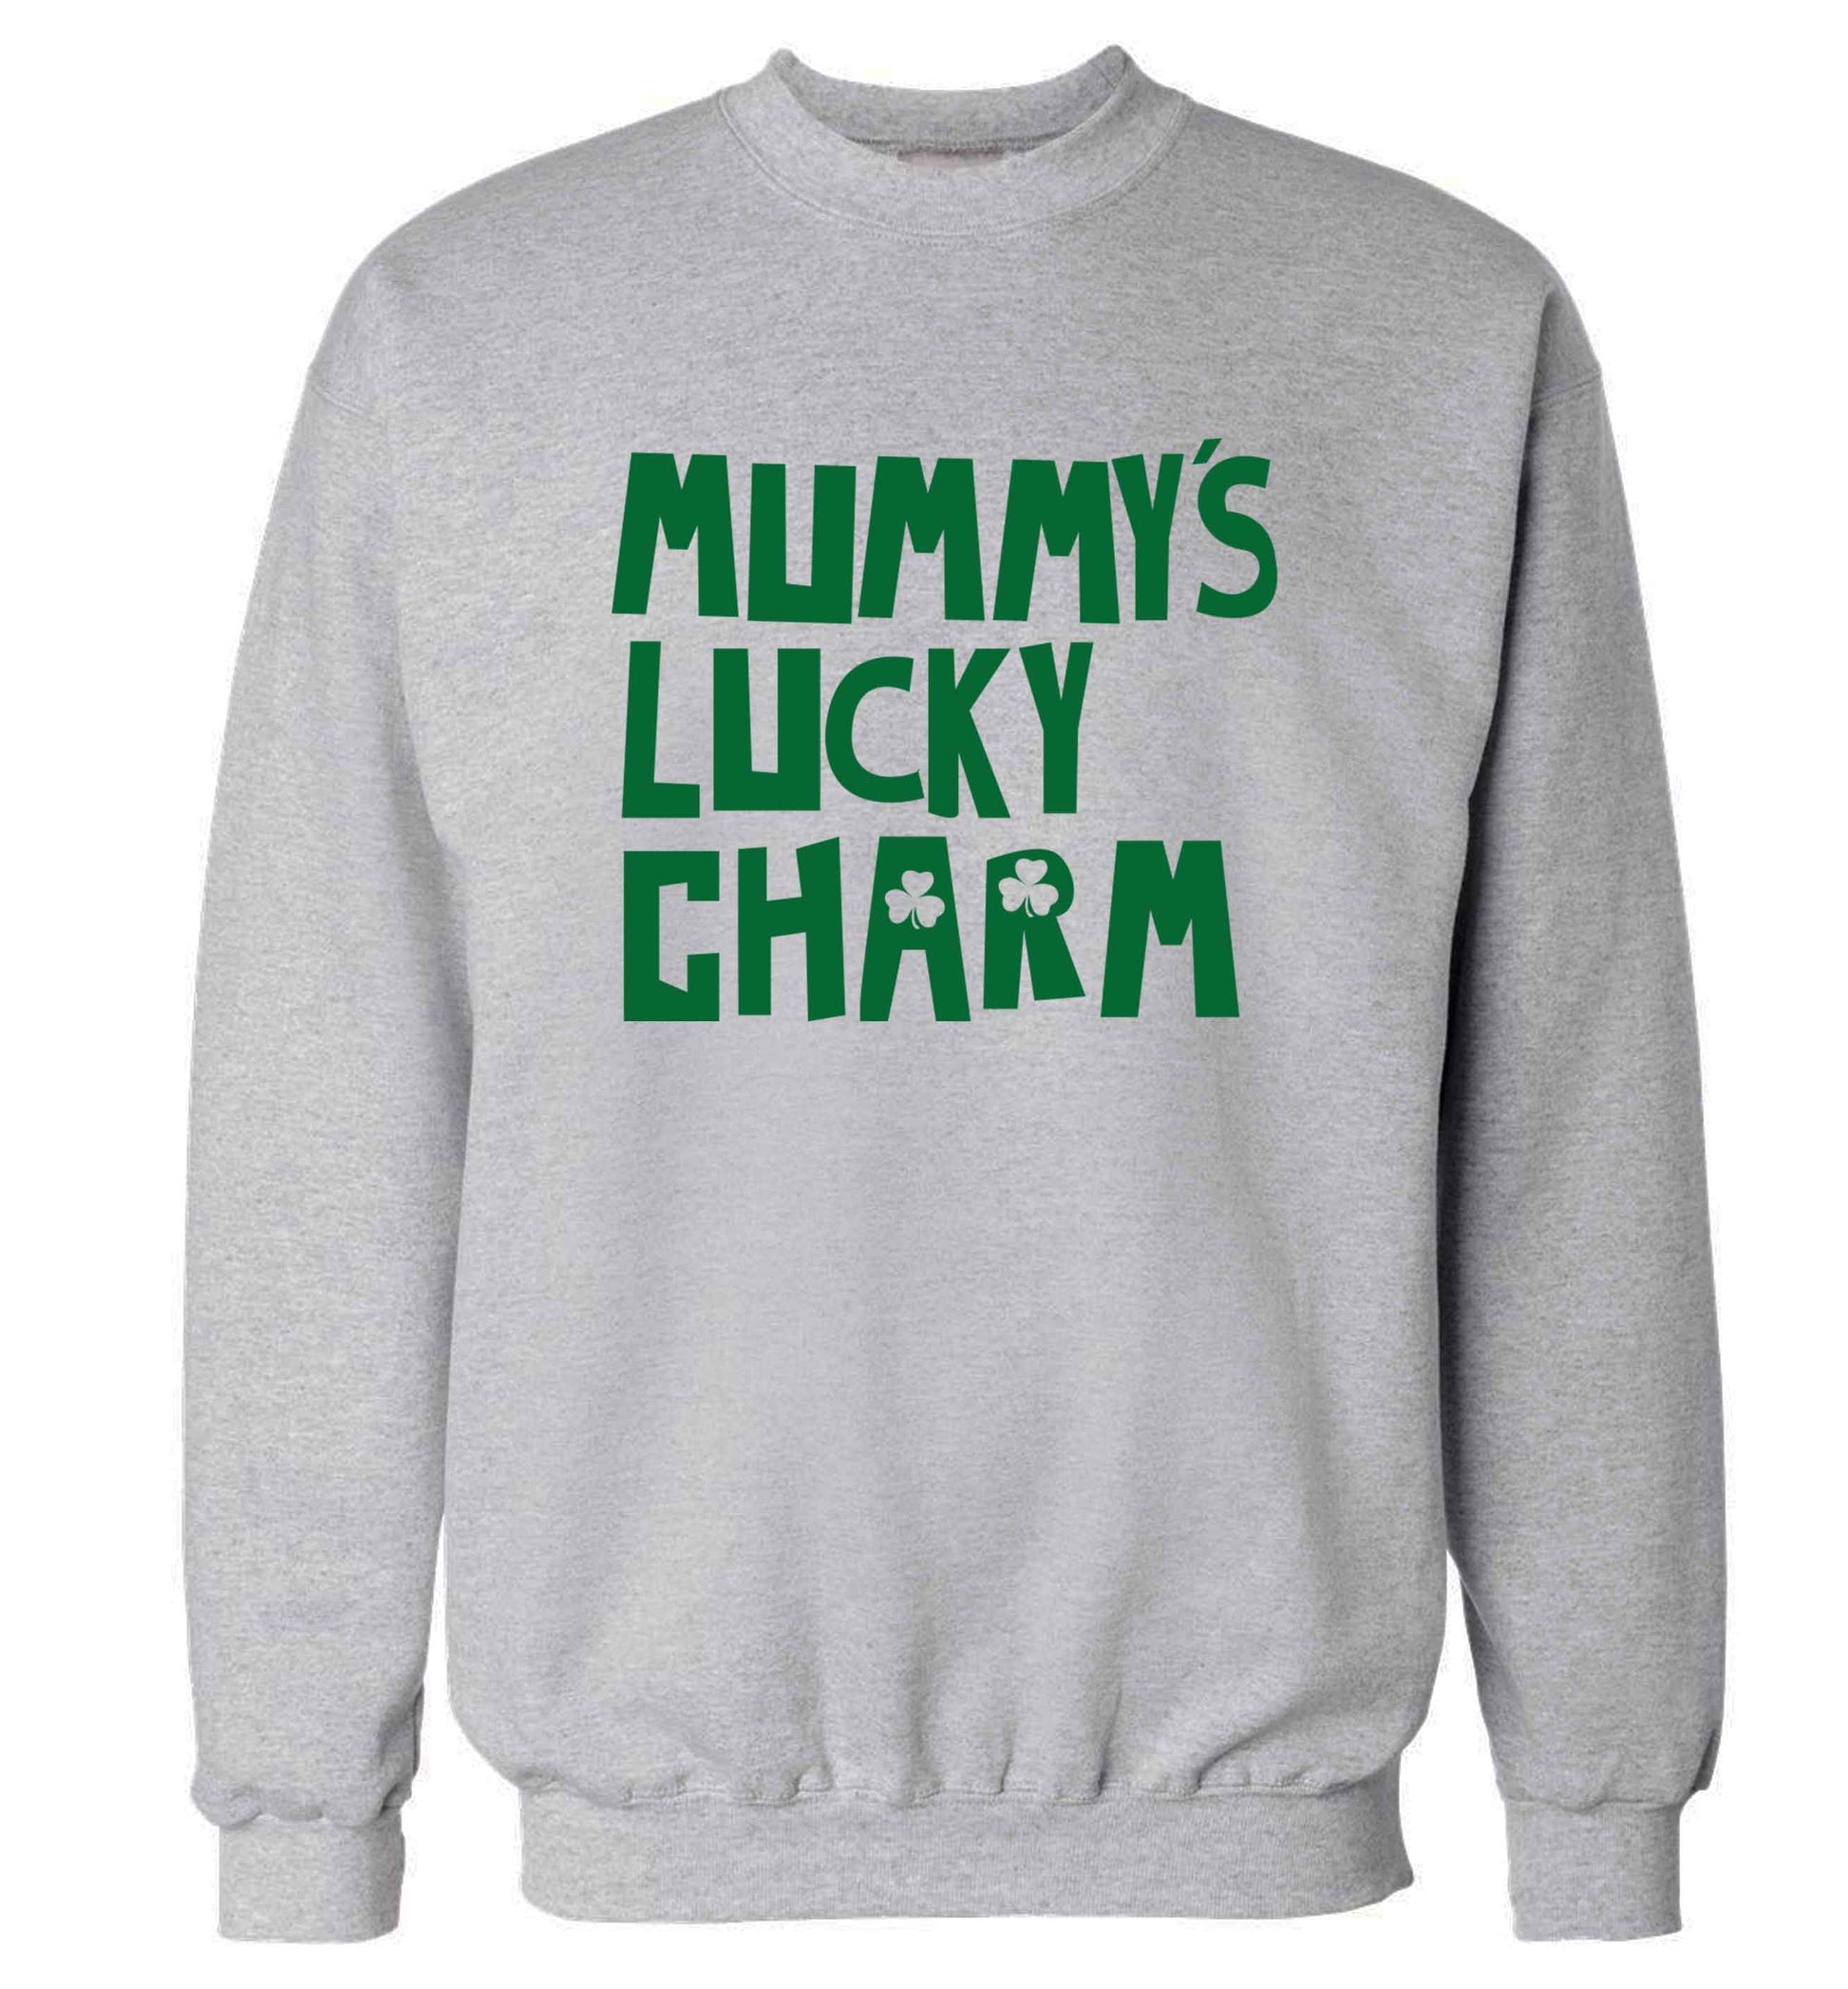 Mummy's lucky charm adult's unisex grey sweater 2XL